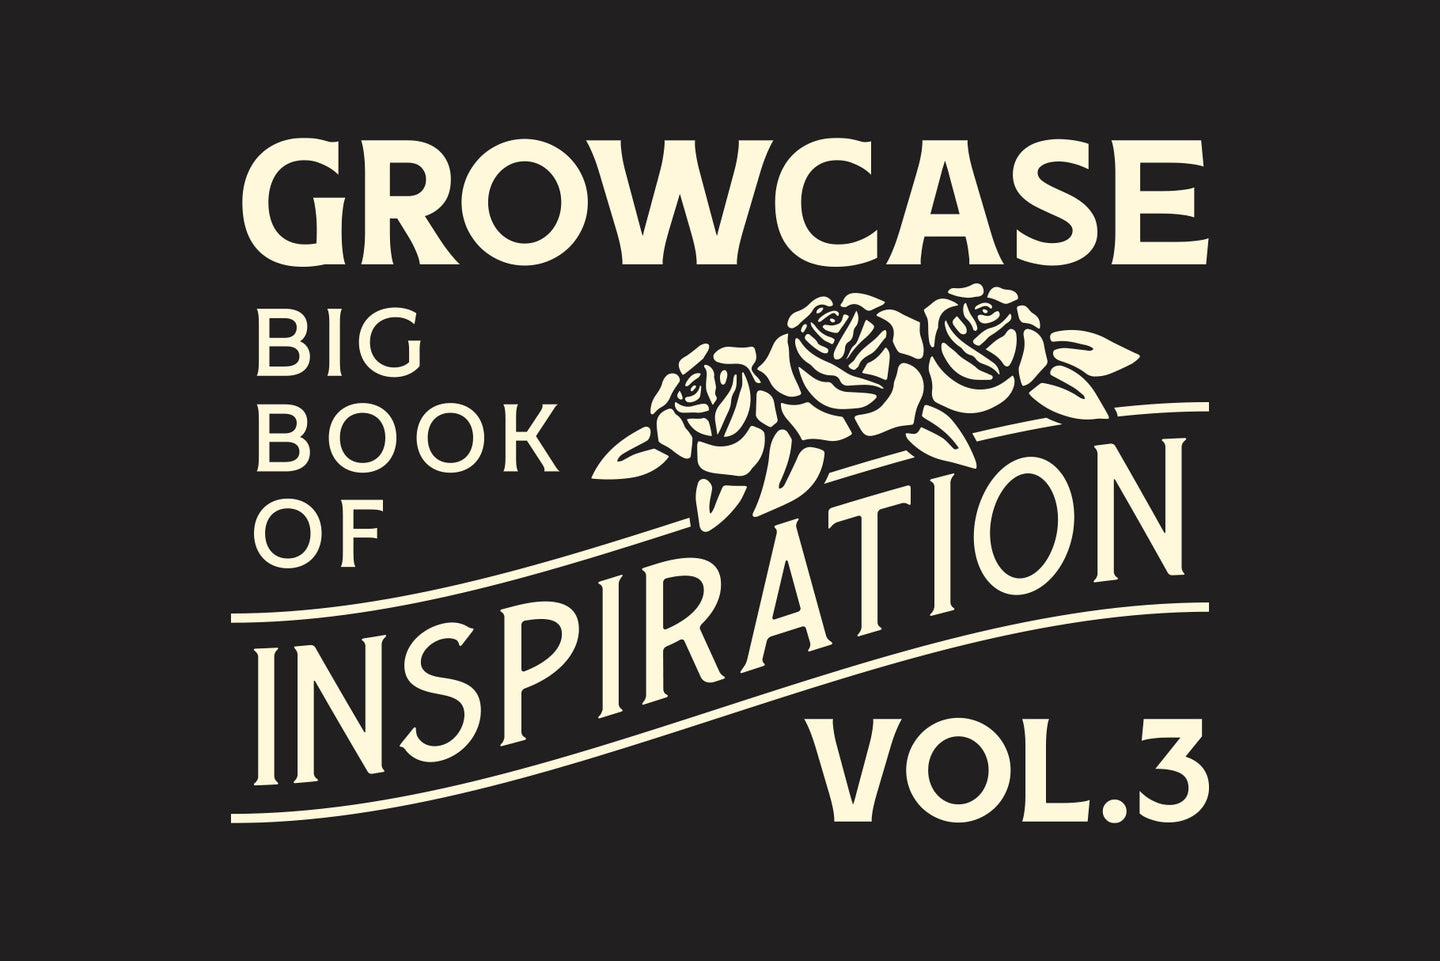 Growcase Big Book of Inspiration - Vol.3